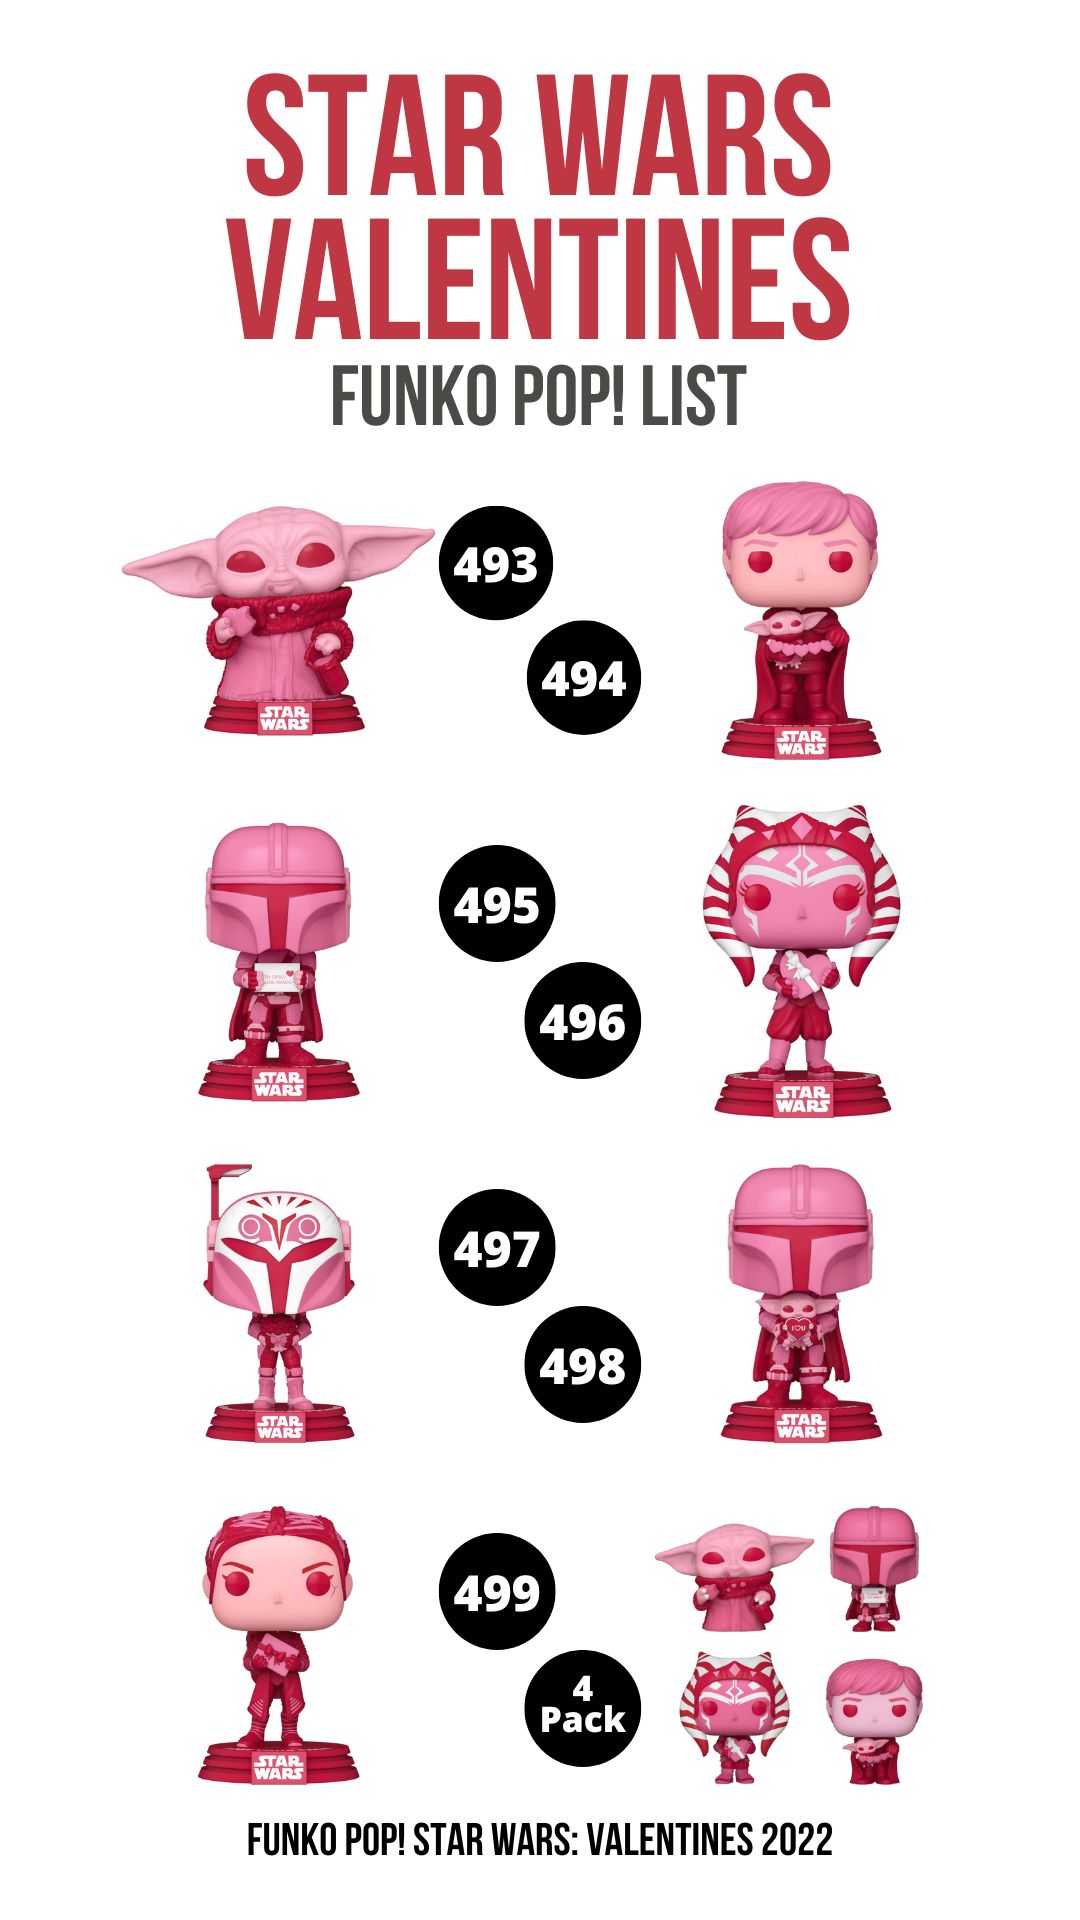 Star Wars Funko Pop Valentines List of Figures 2022